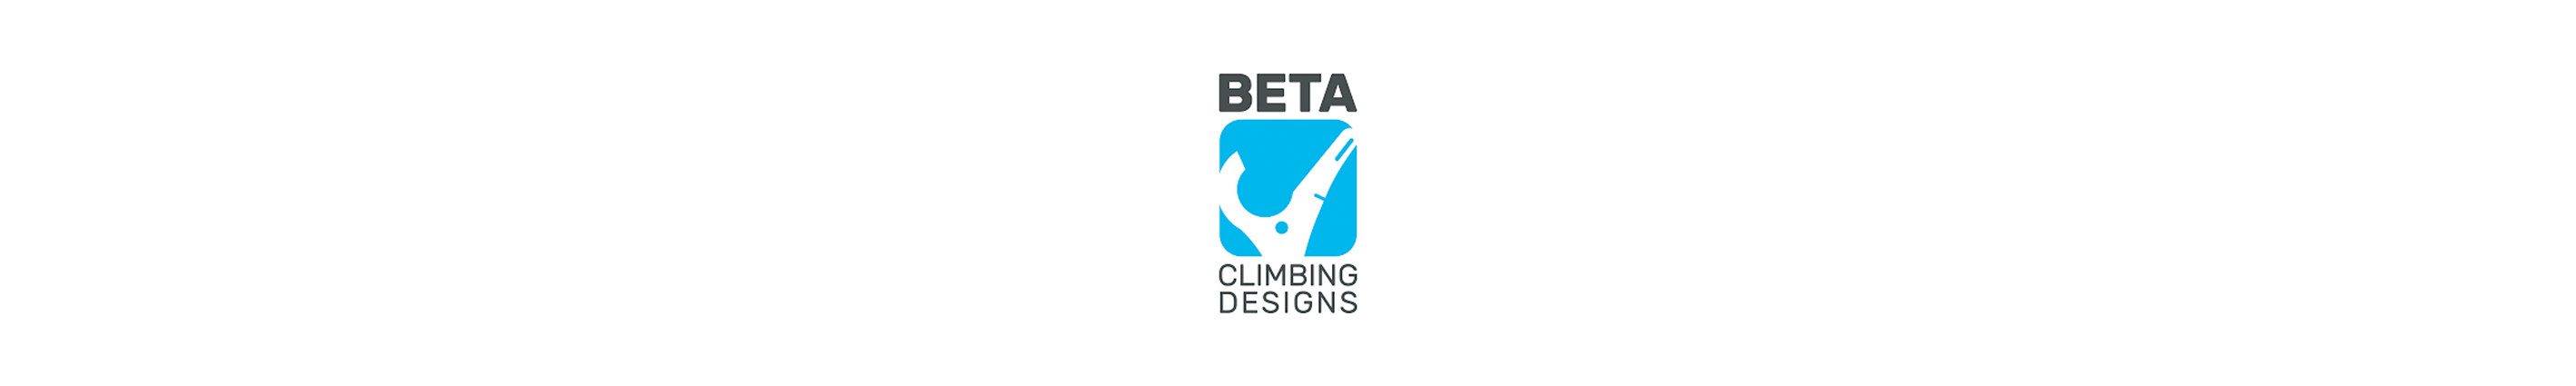 Beta Climbing | Höhenarbeit | Toprope Shop |